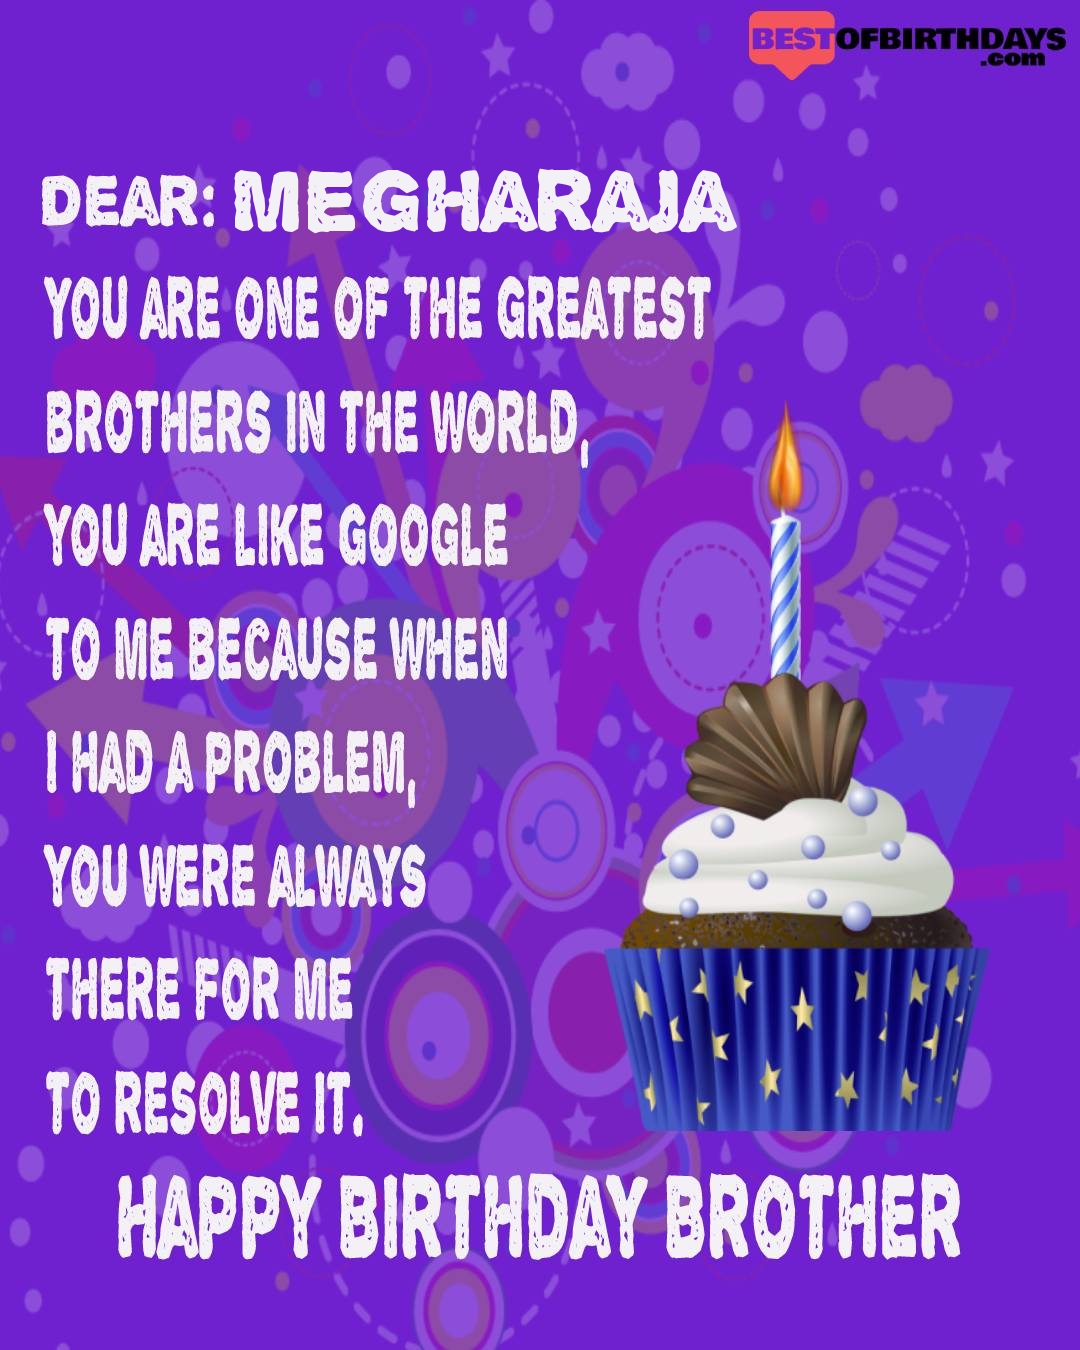 Happy birthday megharaja bhai brother bro